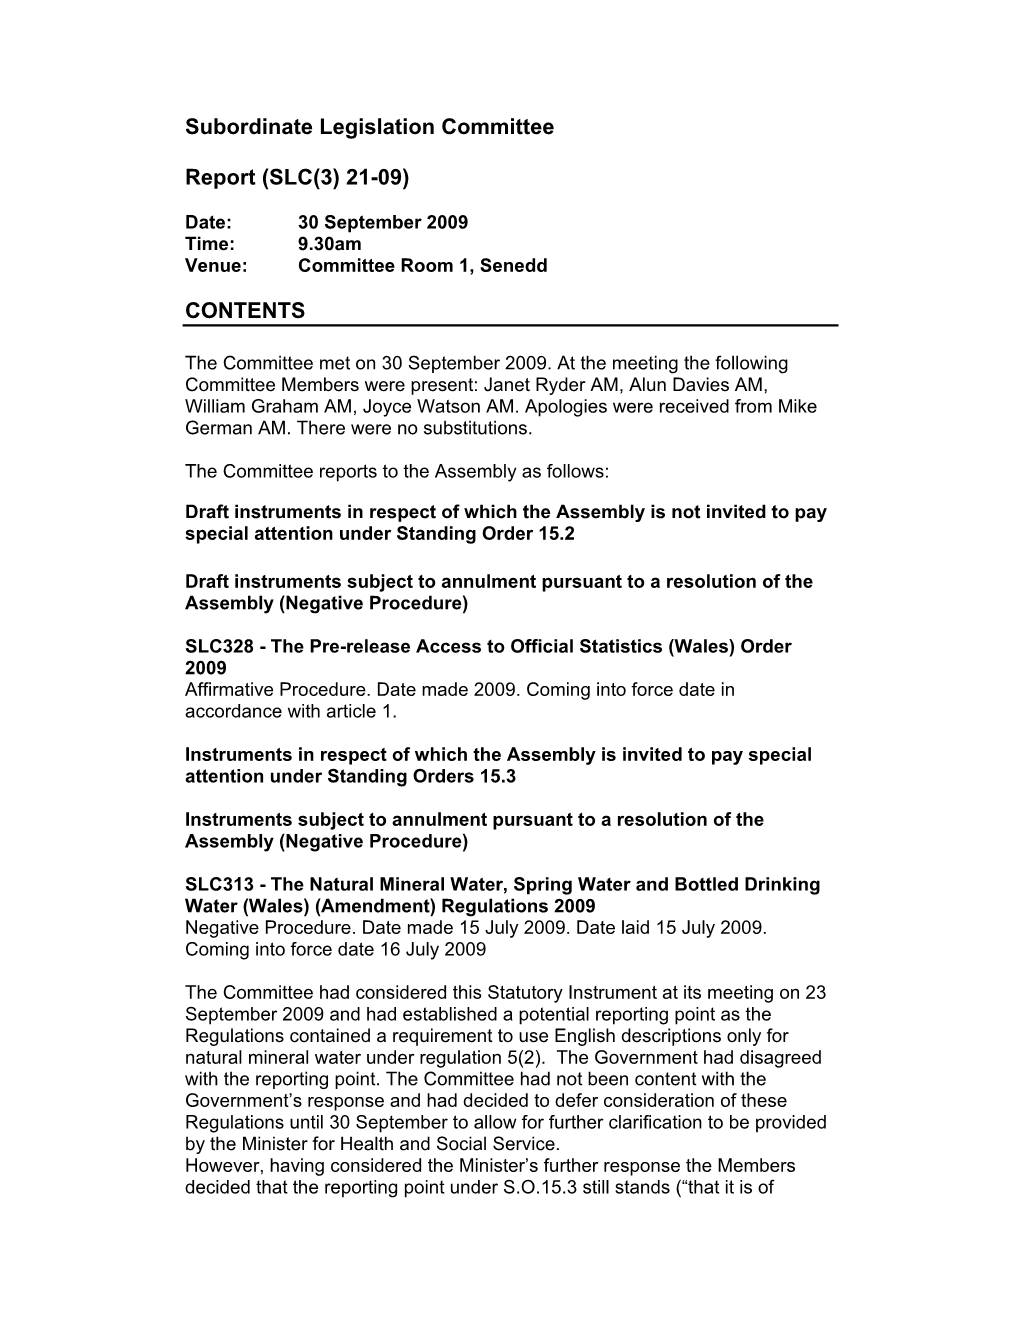 Subordinate Legislation Committee Report (SLC(3) 21-09